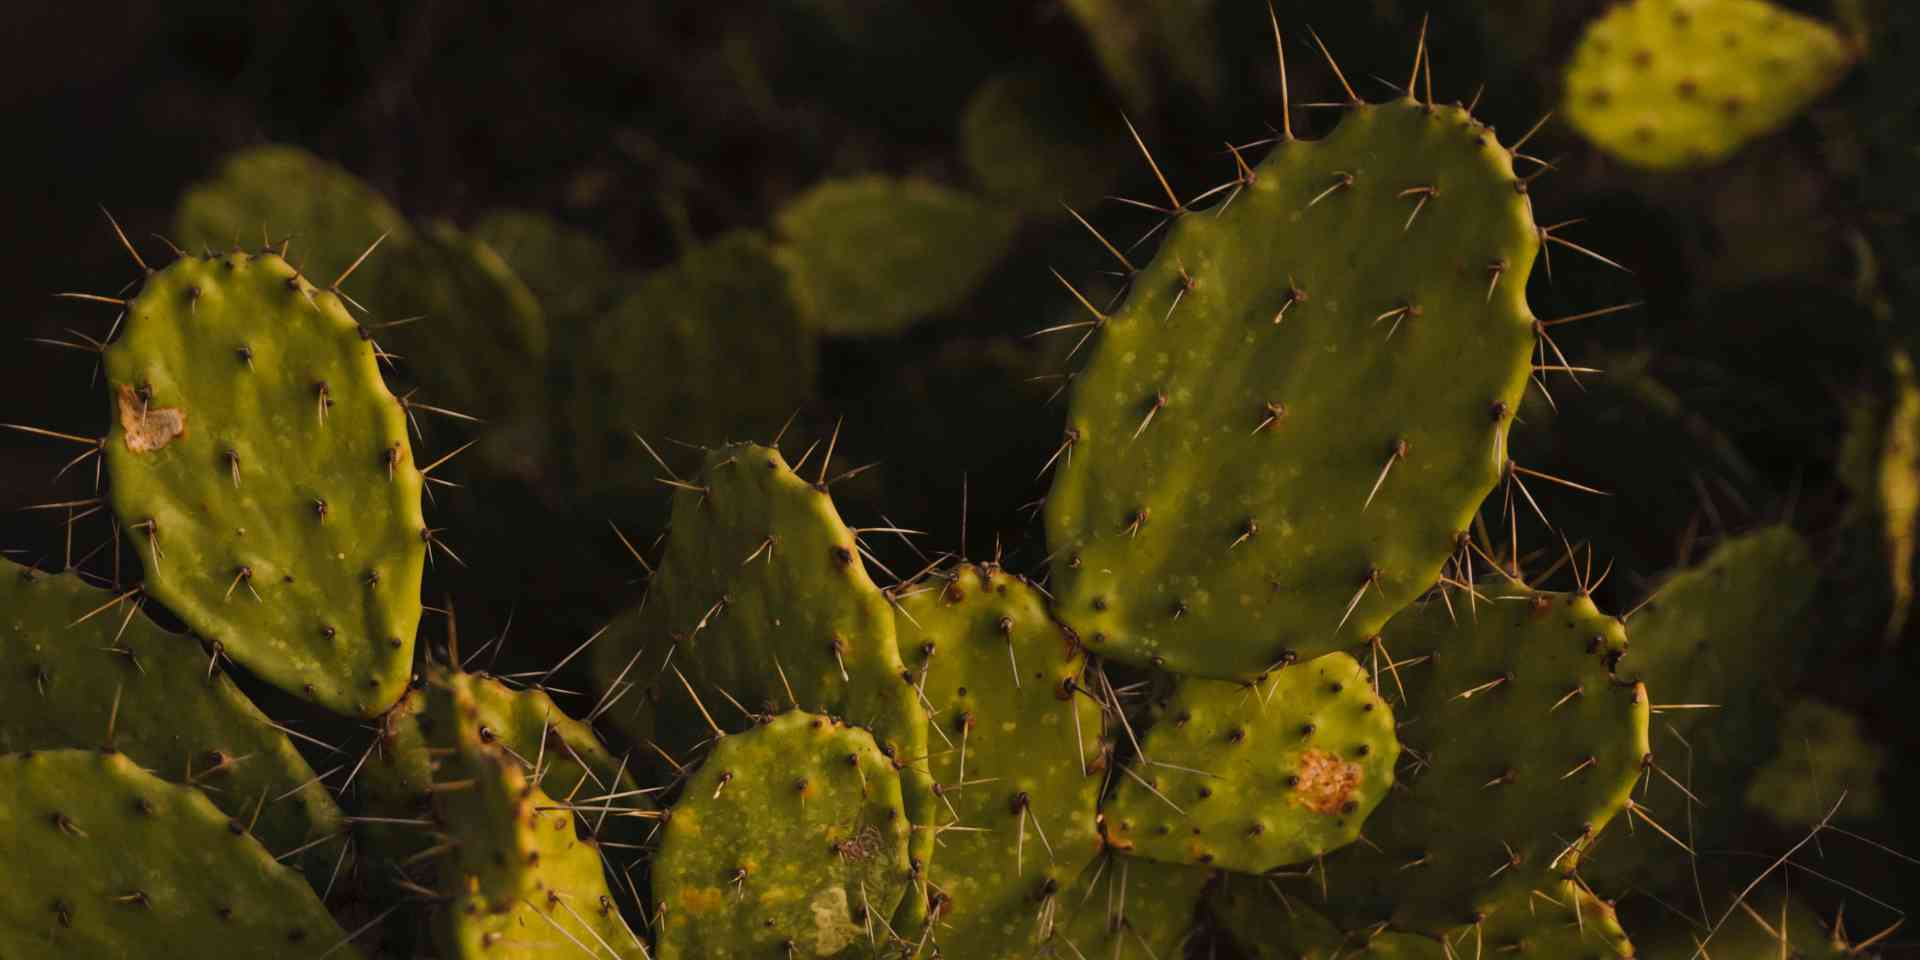 Nopal Cactus a Key Component in Land Reclamation - diego-lozano-TG_ujNMkgB0-unsplash